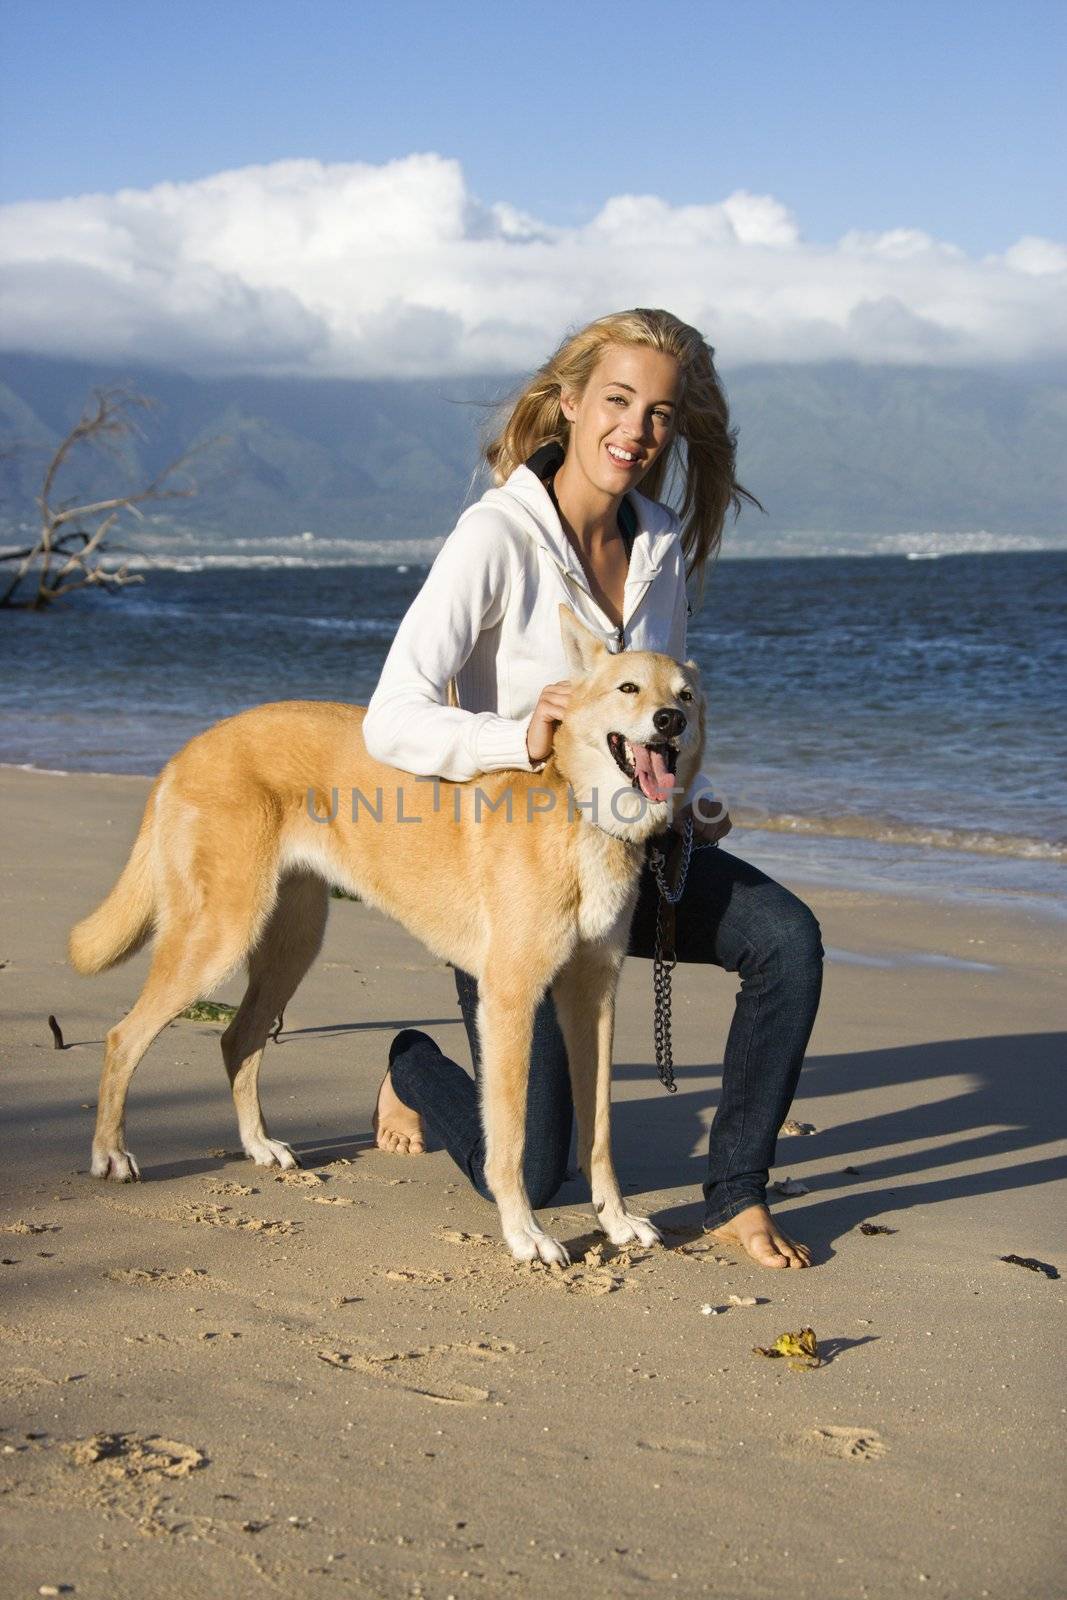 Caucasian woman with brown dog on leash on Maui, Hawaii beach.